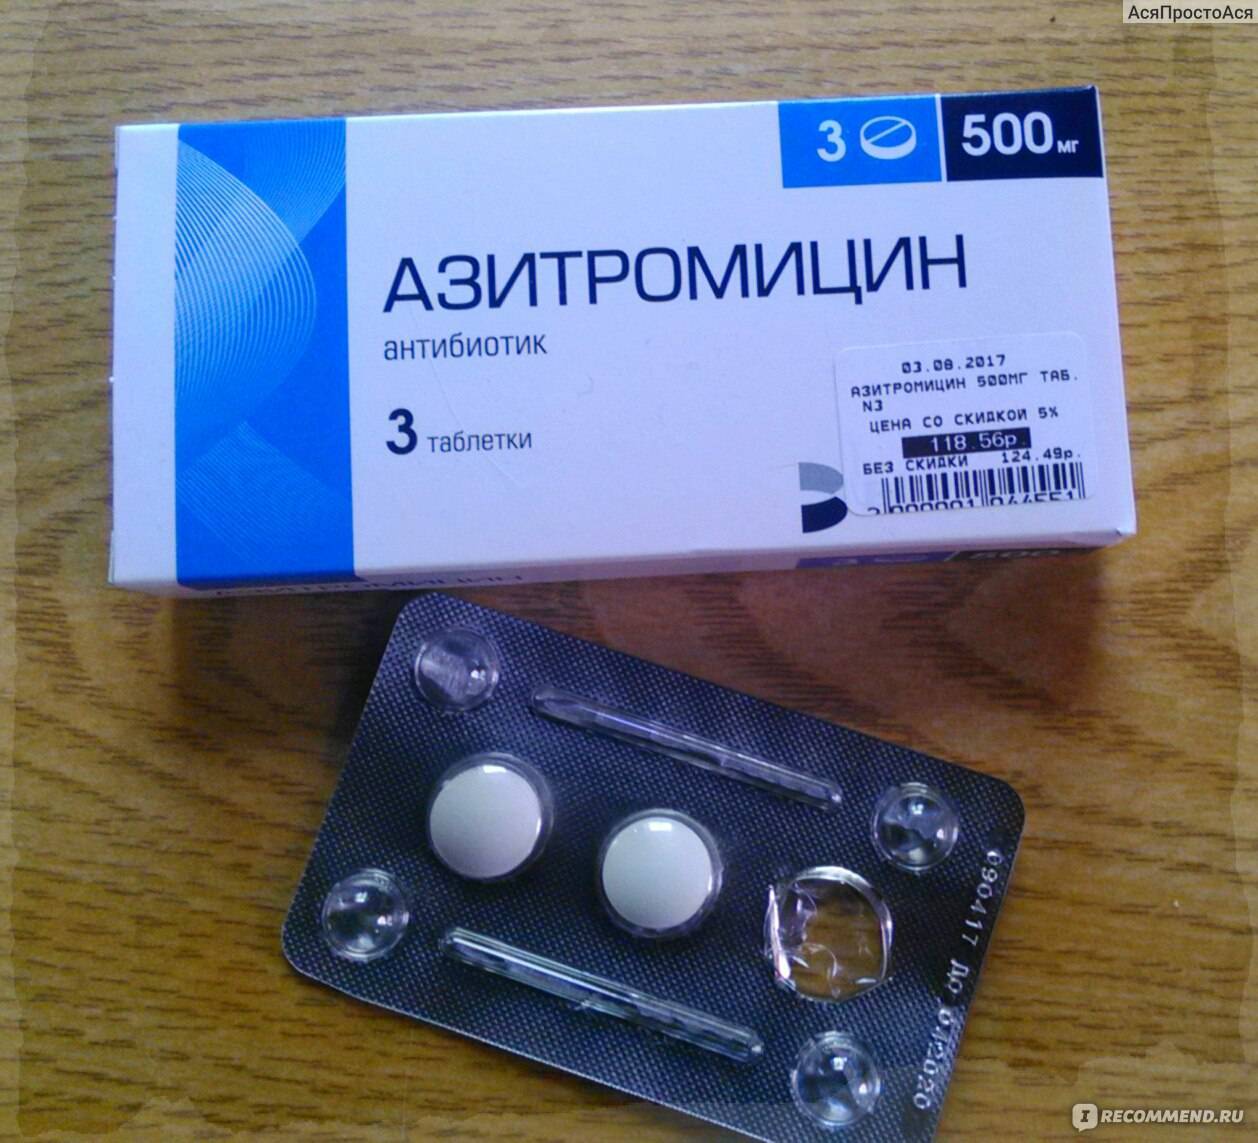 Сильные антибиотики взрослые. Антибиотик три таблетки Азитромицин. Таблетки 3 шт антибиотики Азитромицин. Три таблетки от простуды антибиотик Азитромицин. Антибиотик azithromycin 500.